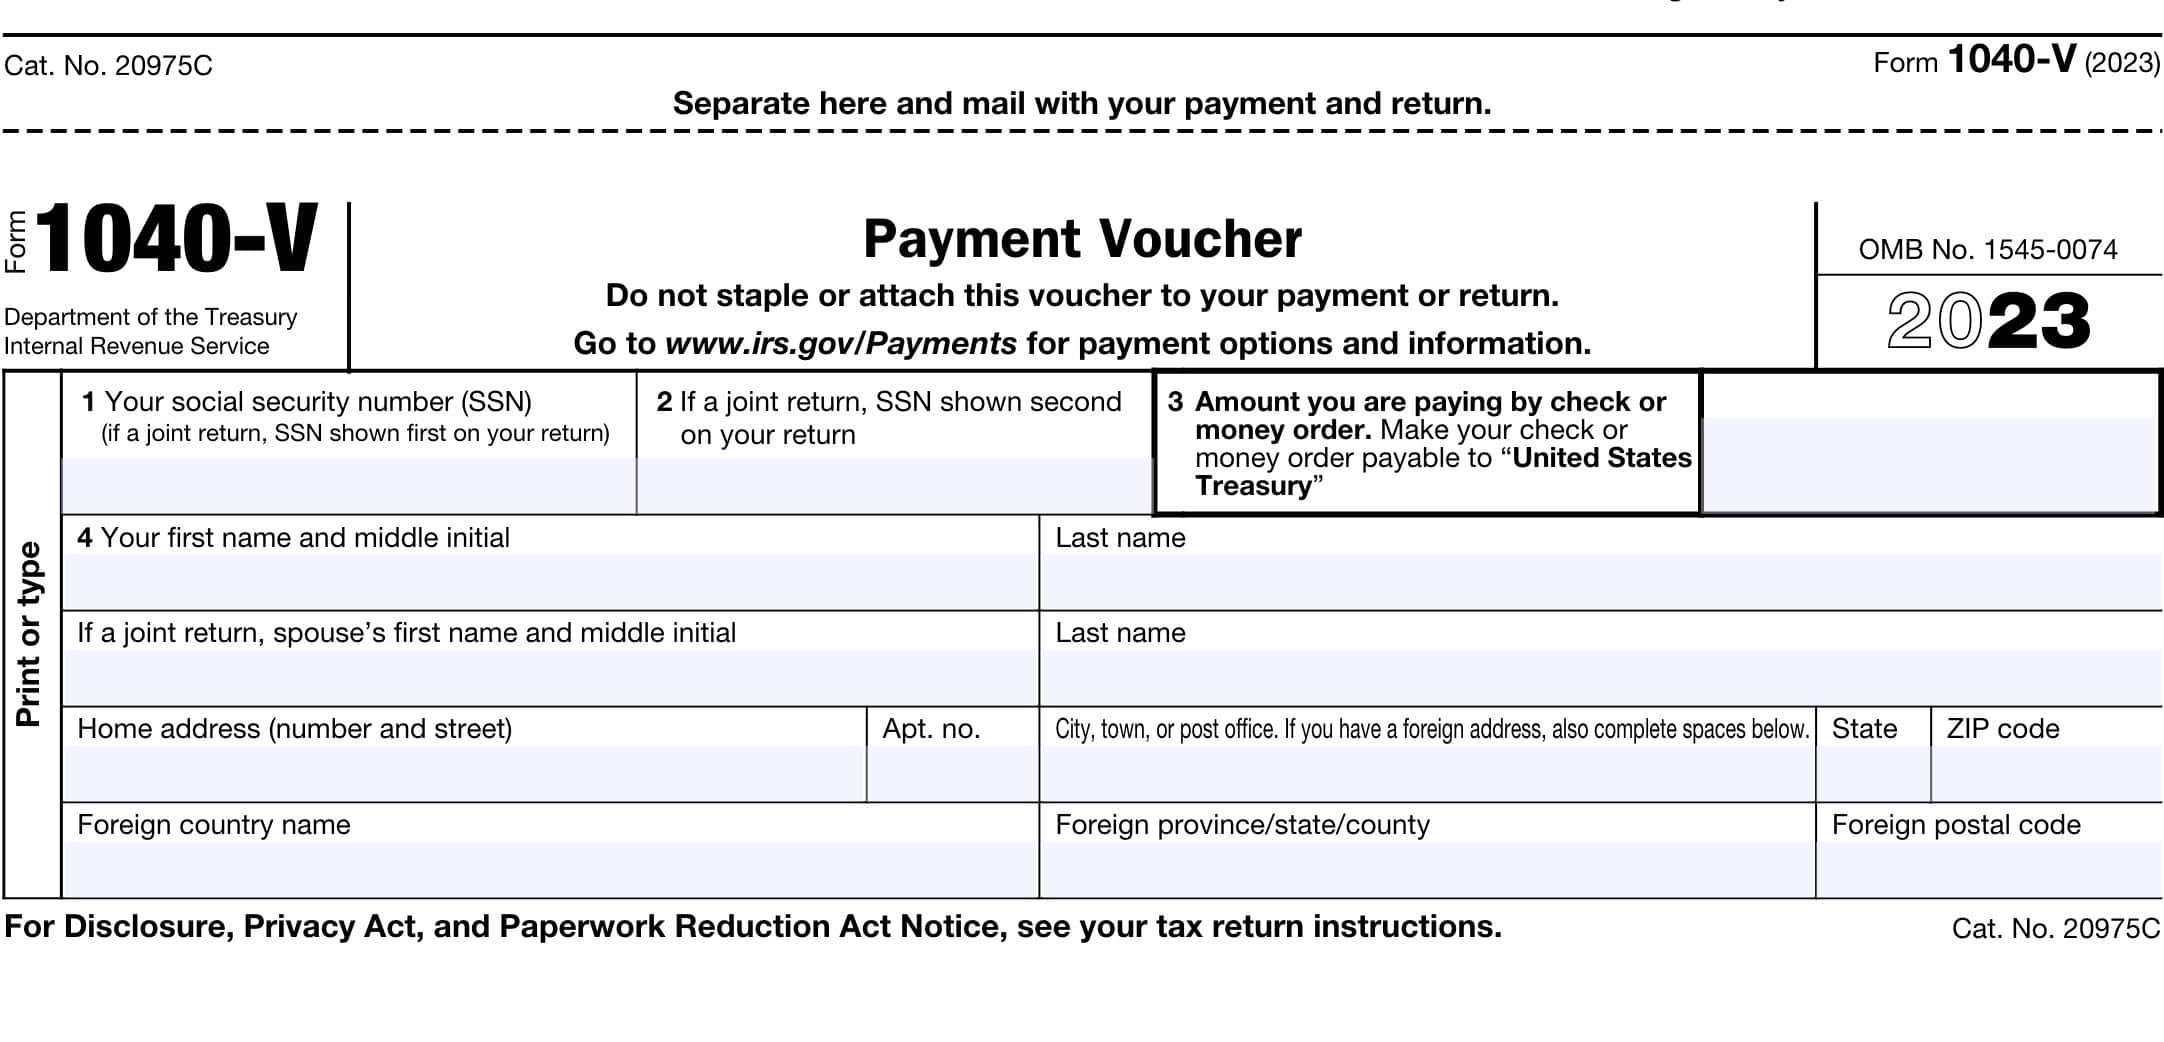 irs form 1040-v, payment voucher